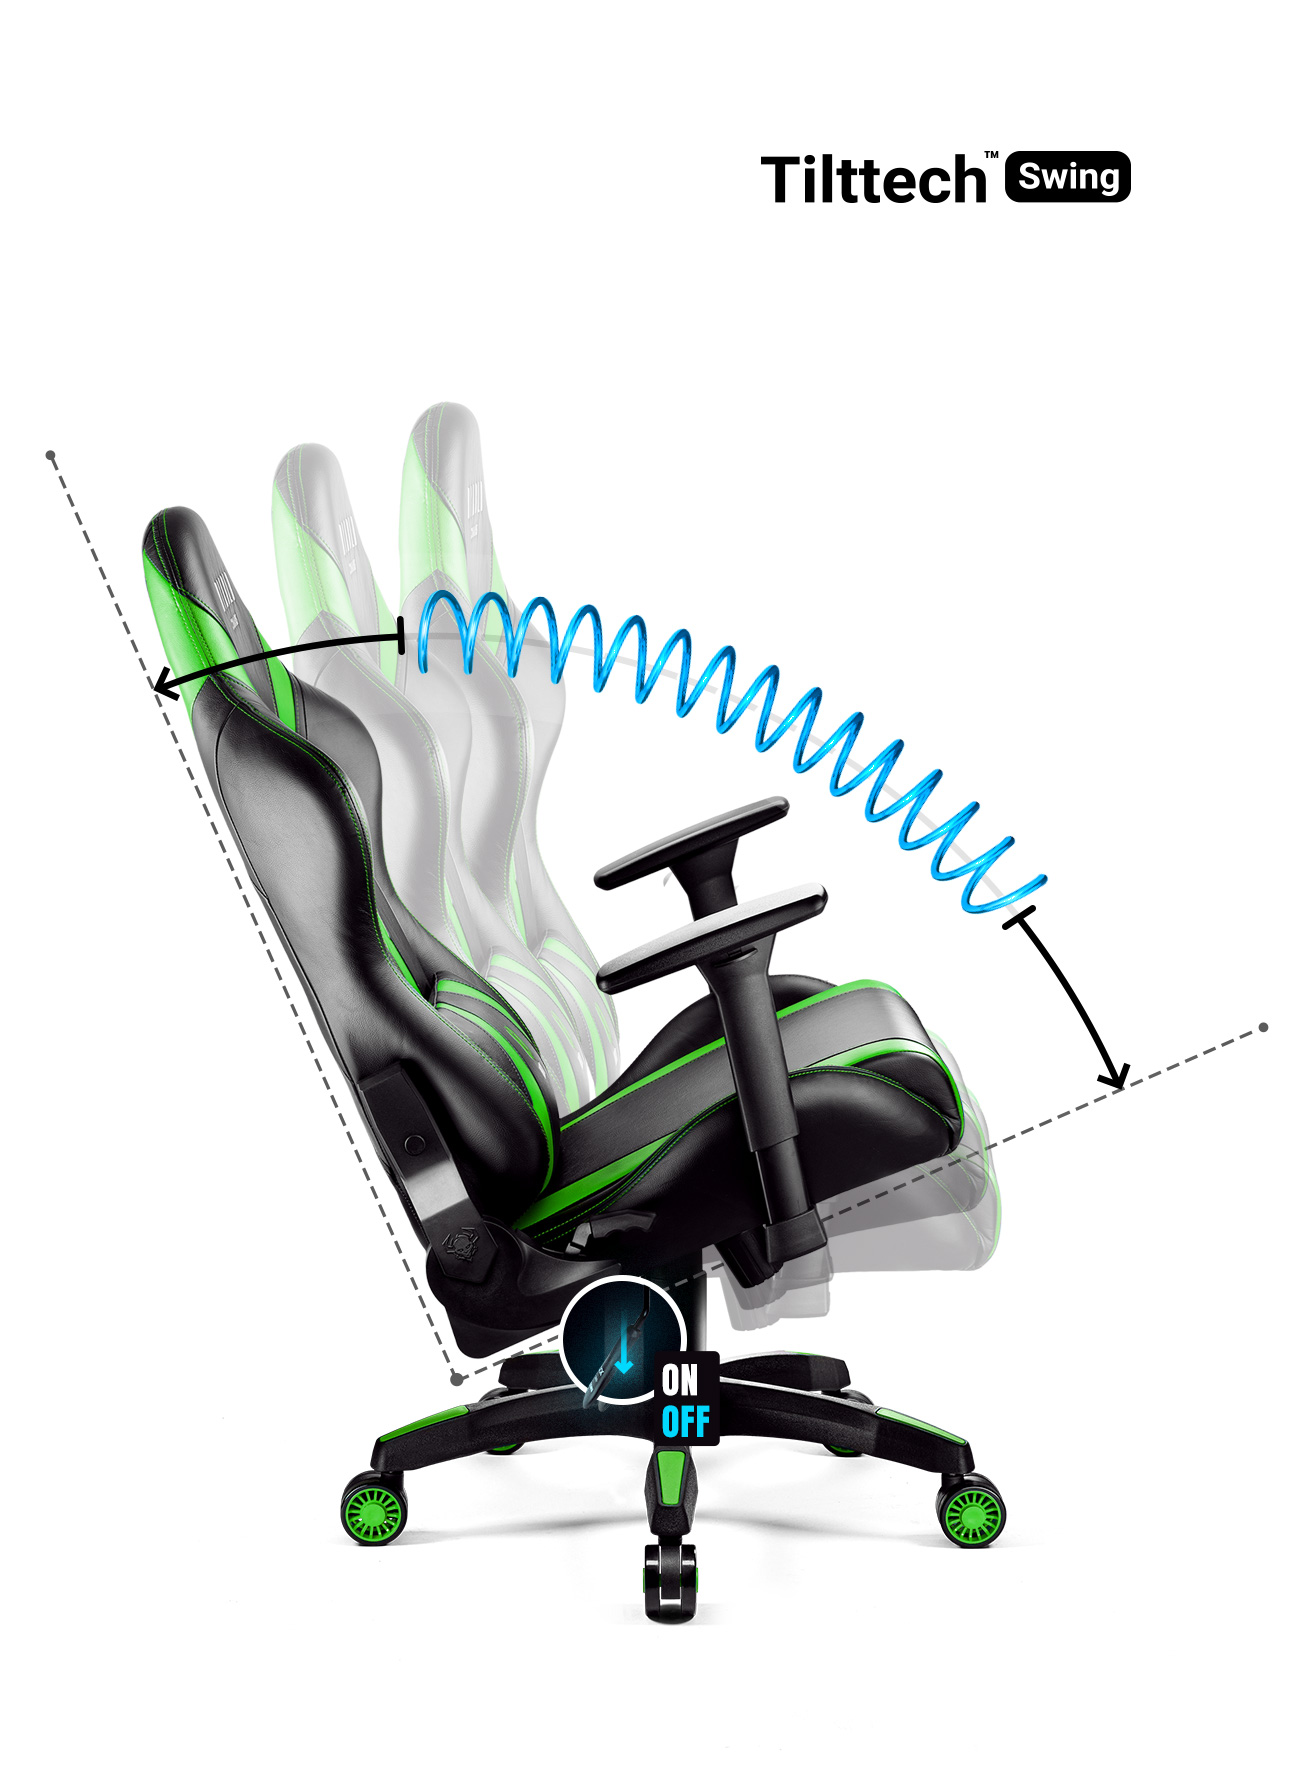 NORMAL Gaming Chair, CHAIRS black/green X-HORN 2.0 STUHL GAMING DIABLO